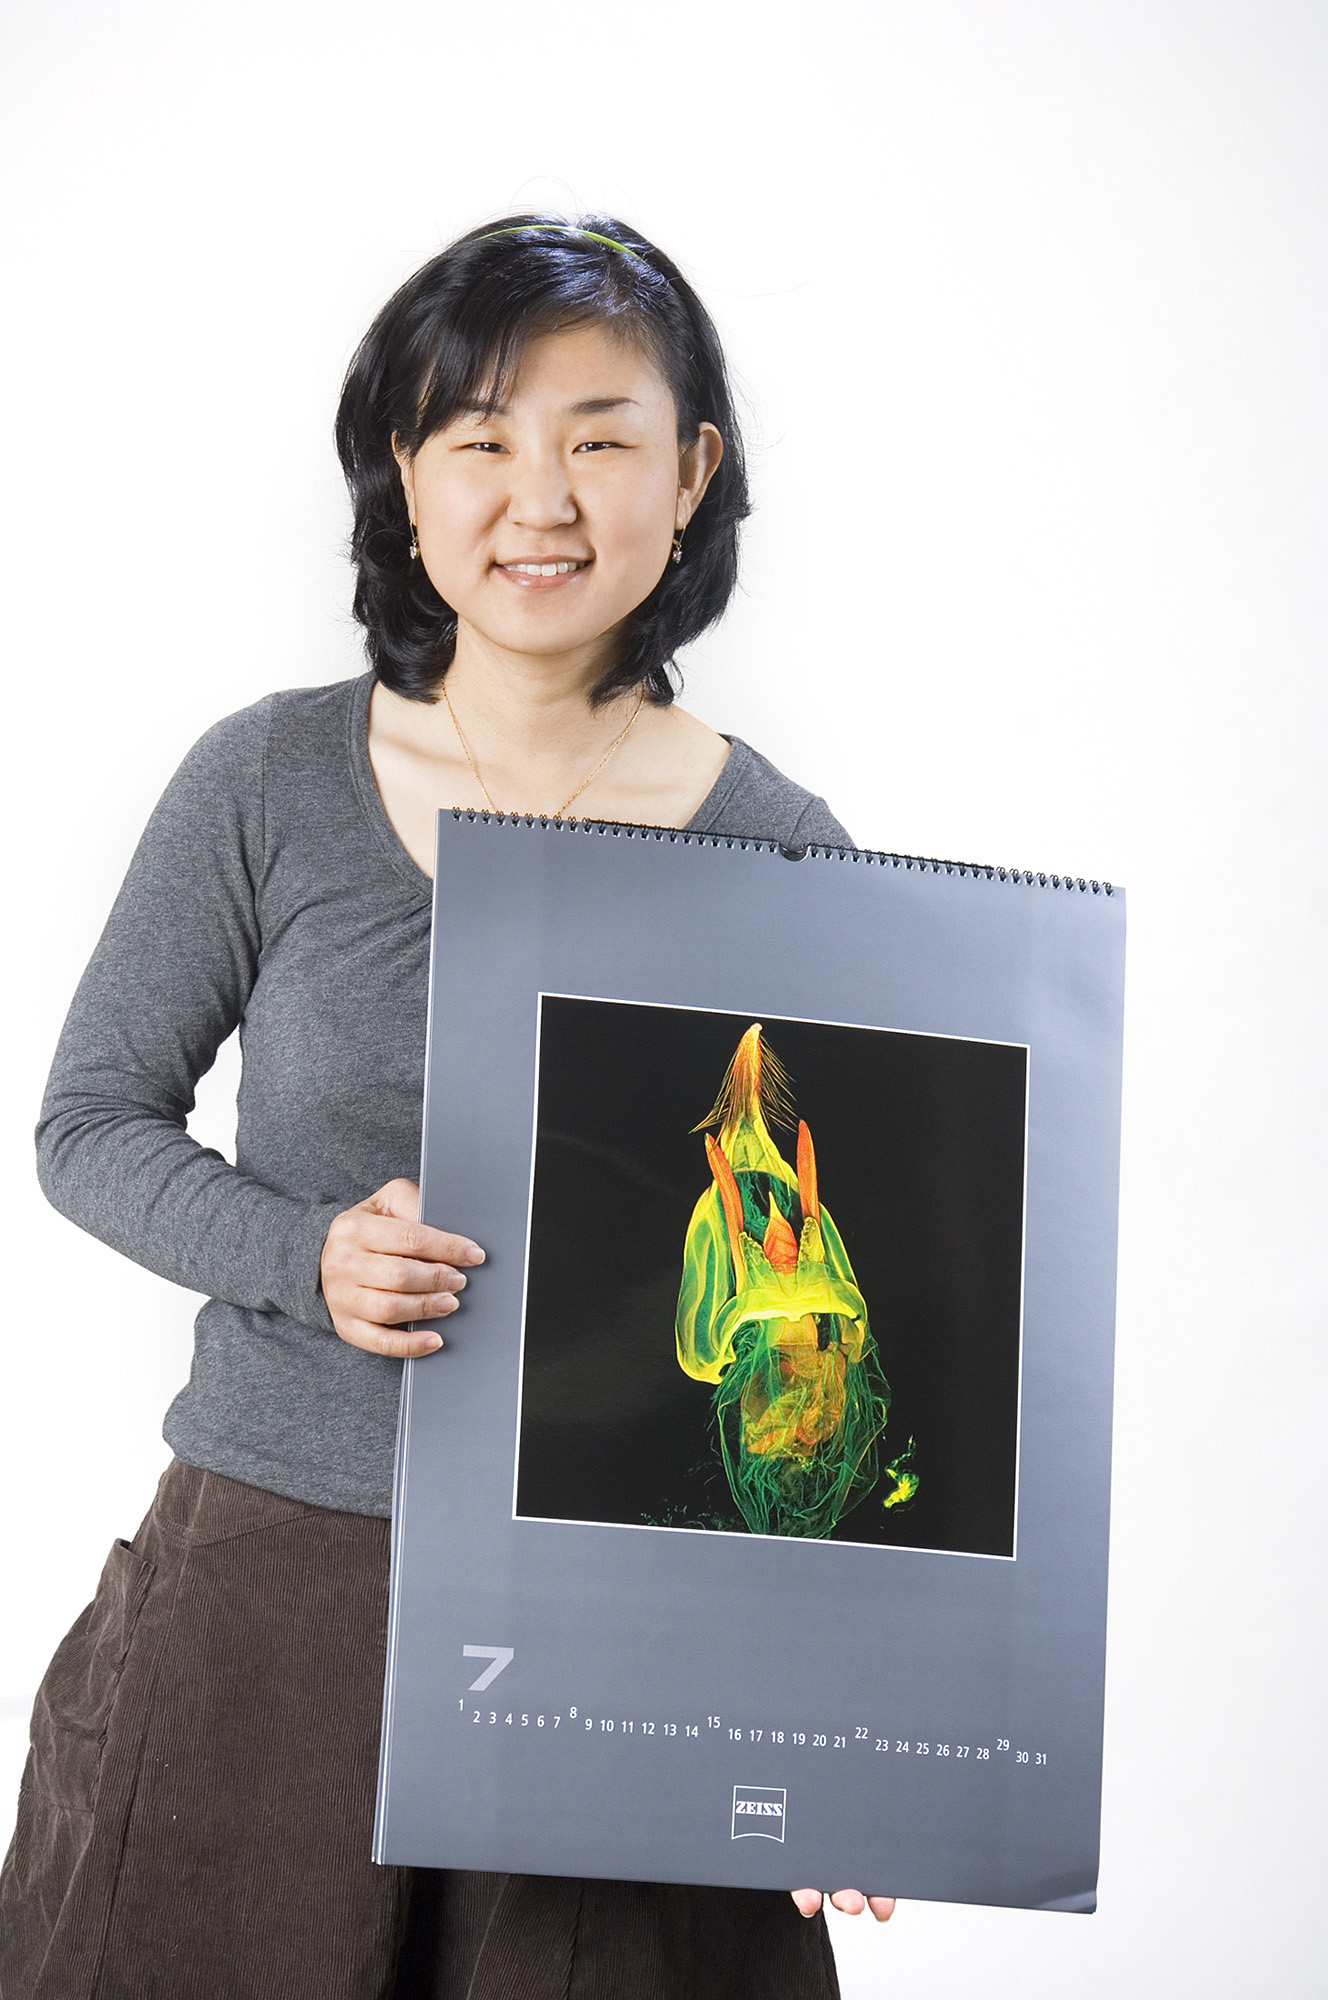 Sangmi Lee displays image as it appears in the Zeiss 2007 calendar